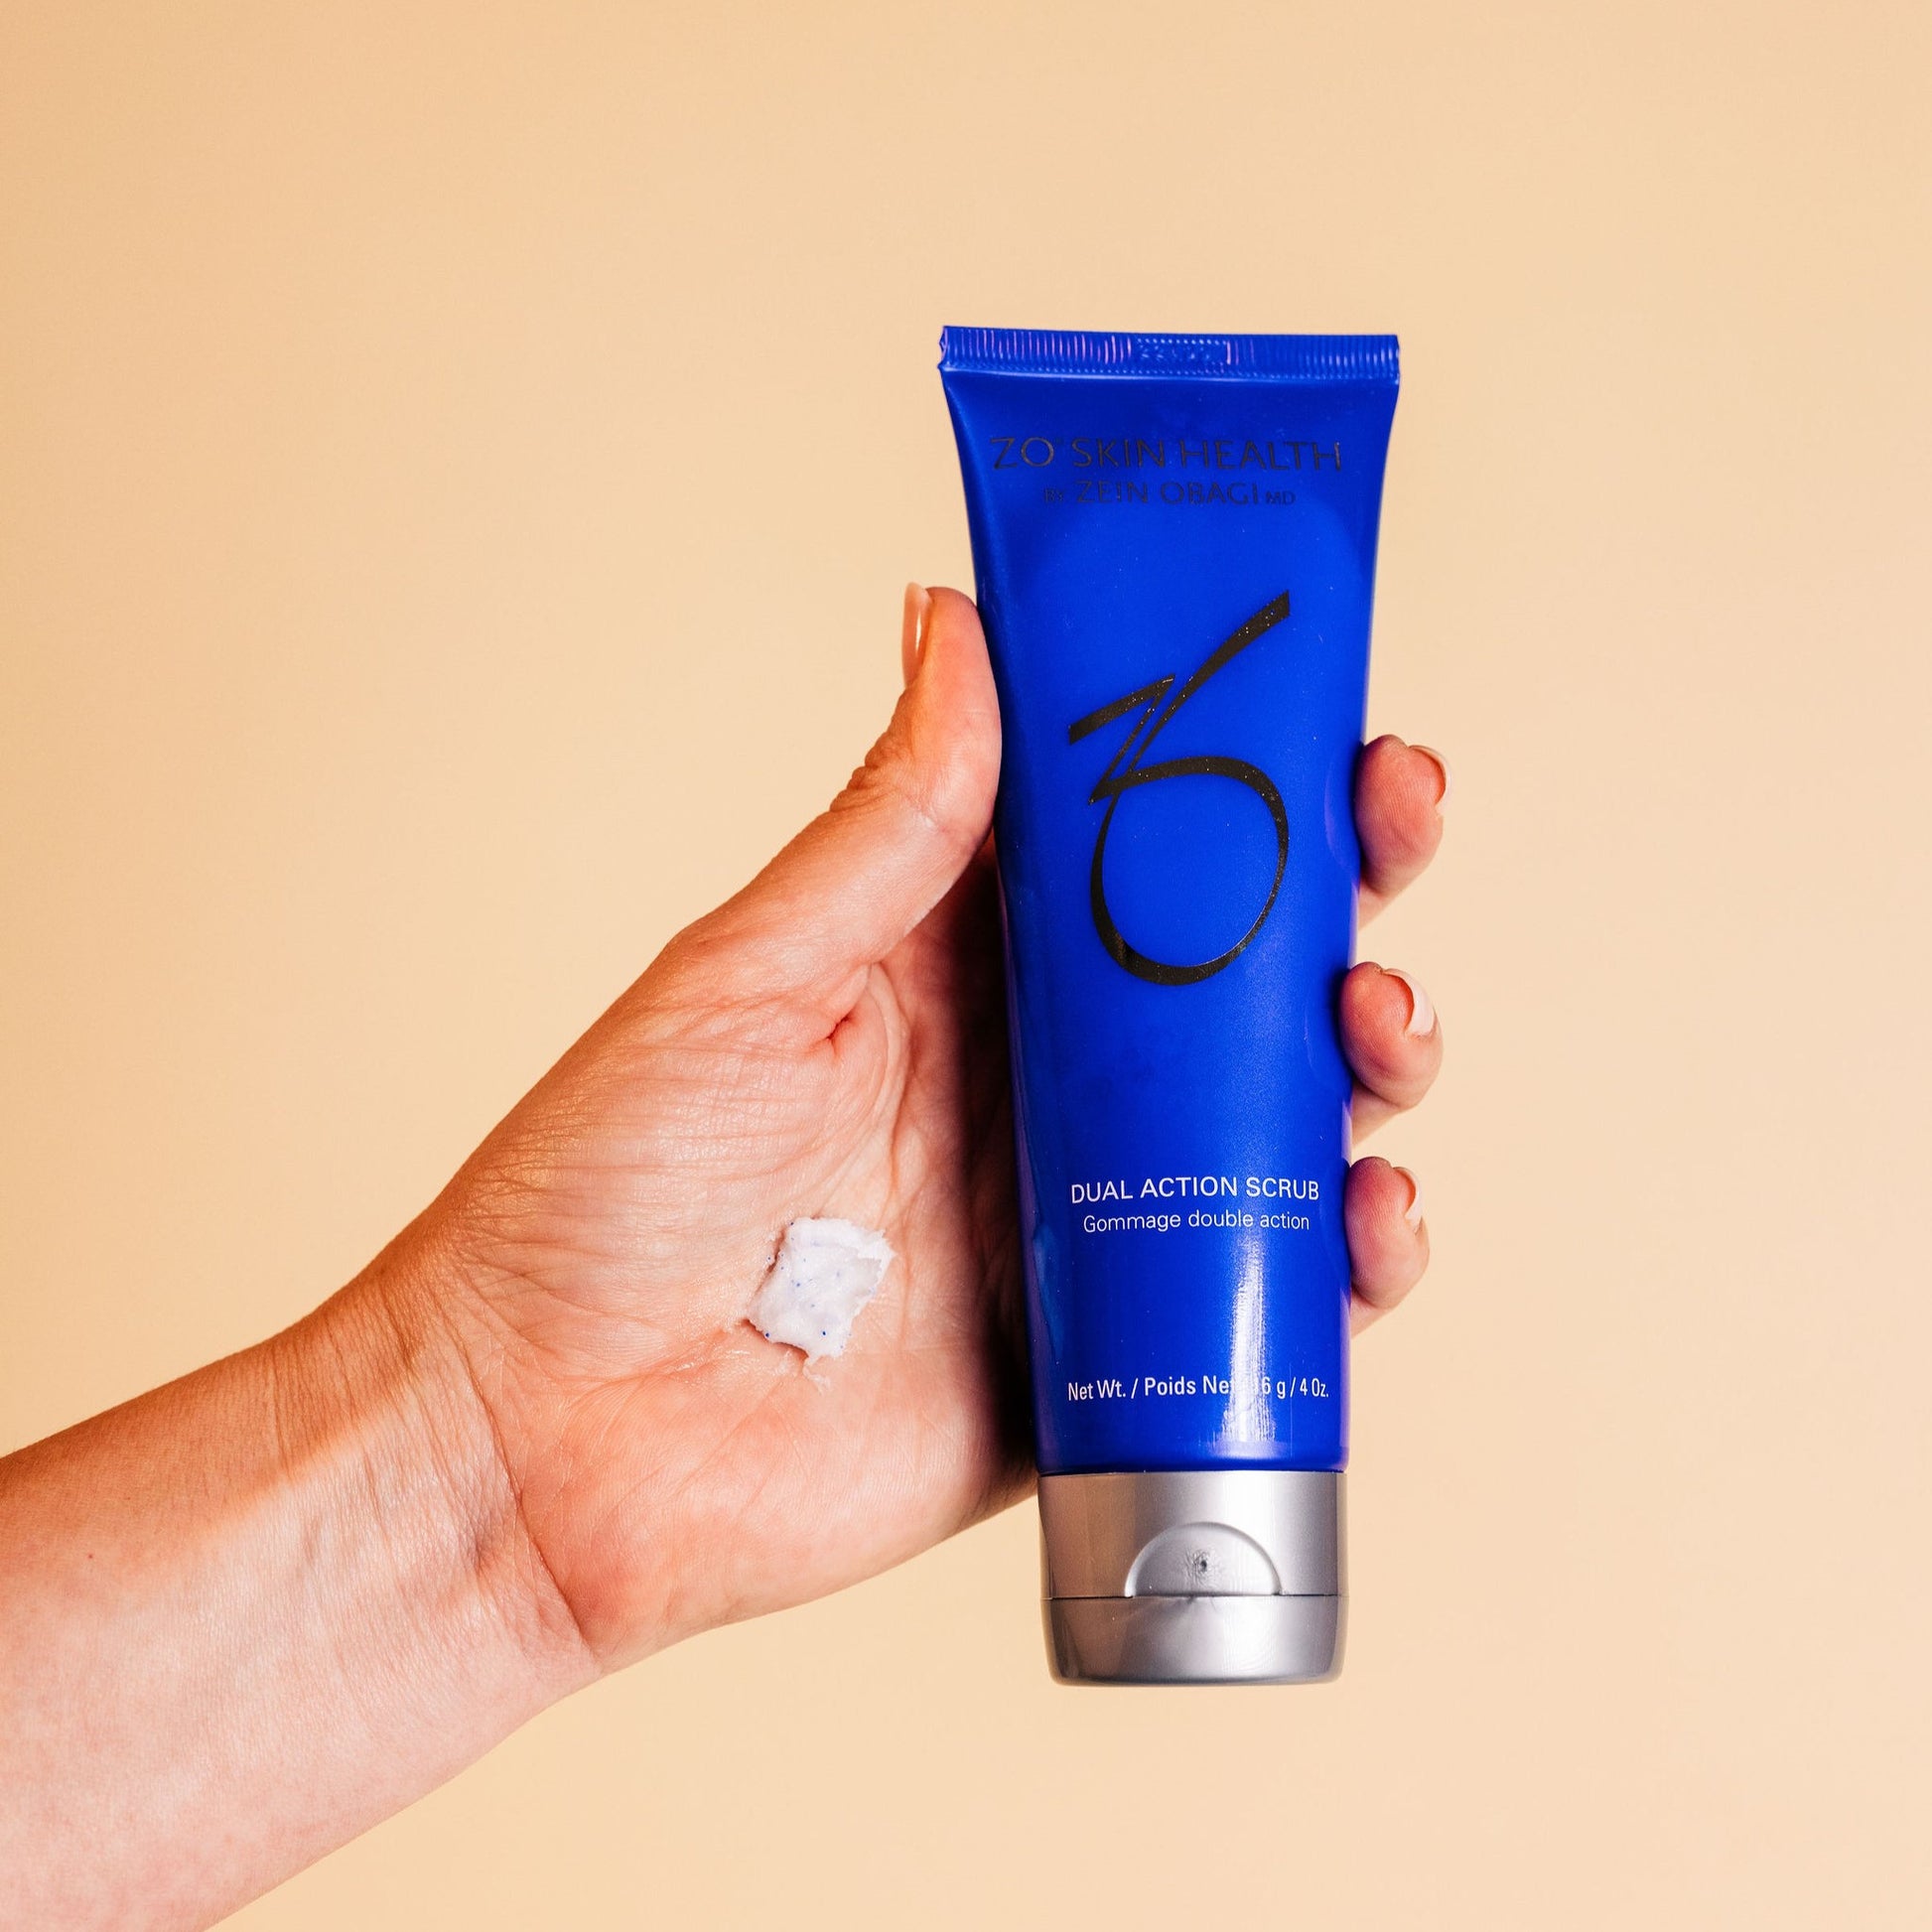 ZO Skin Health's Dual Action Scrub